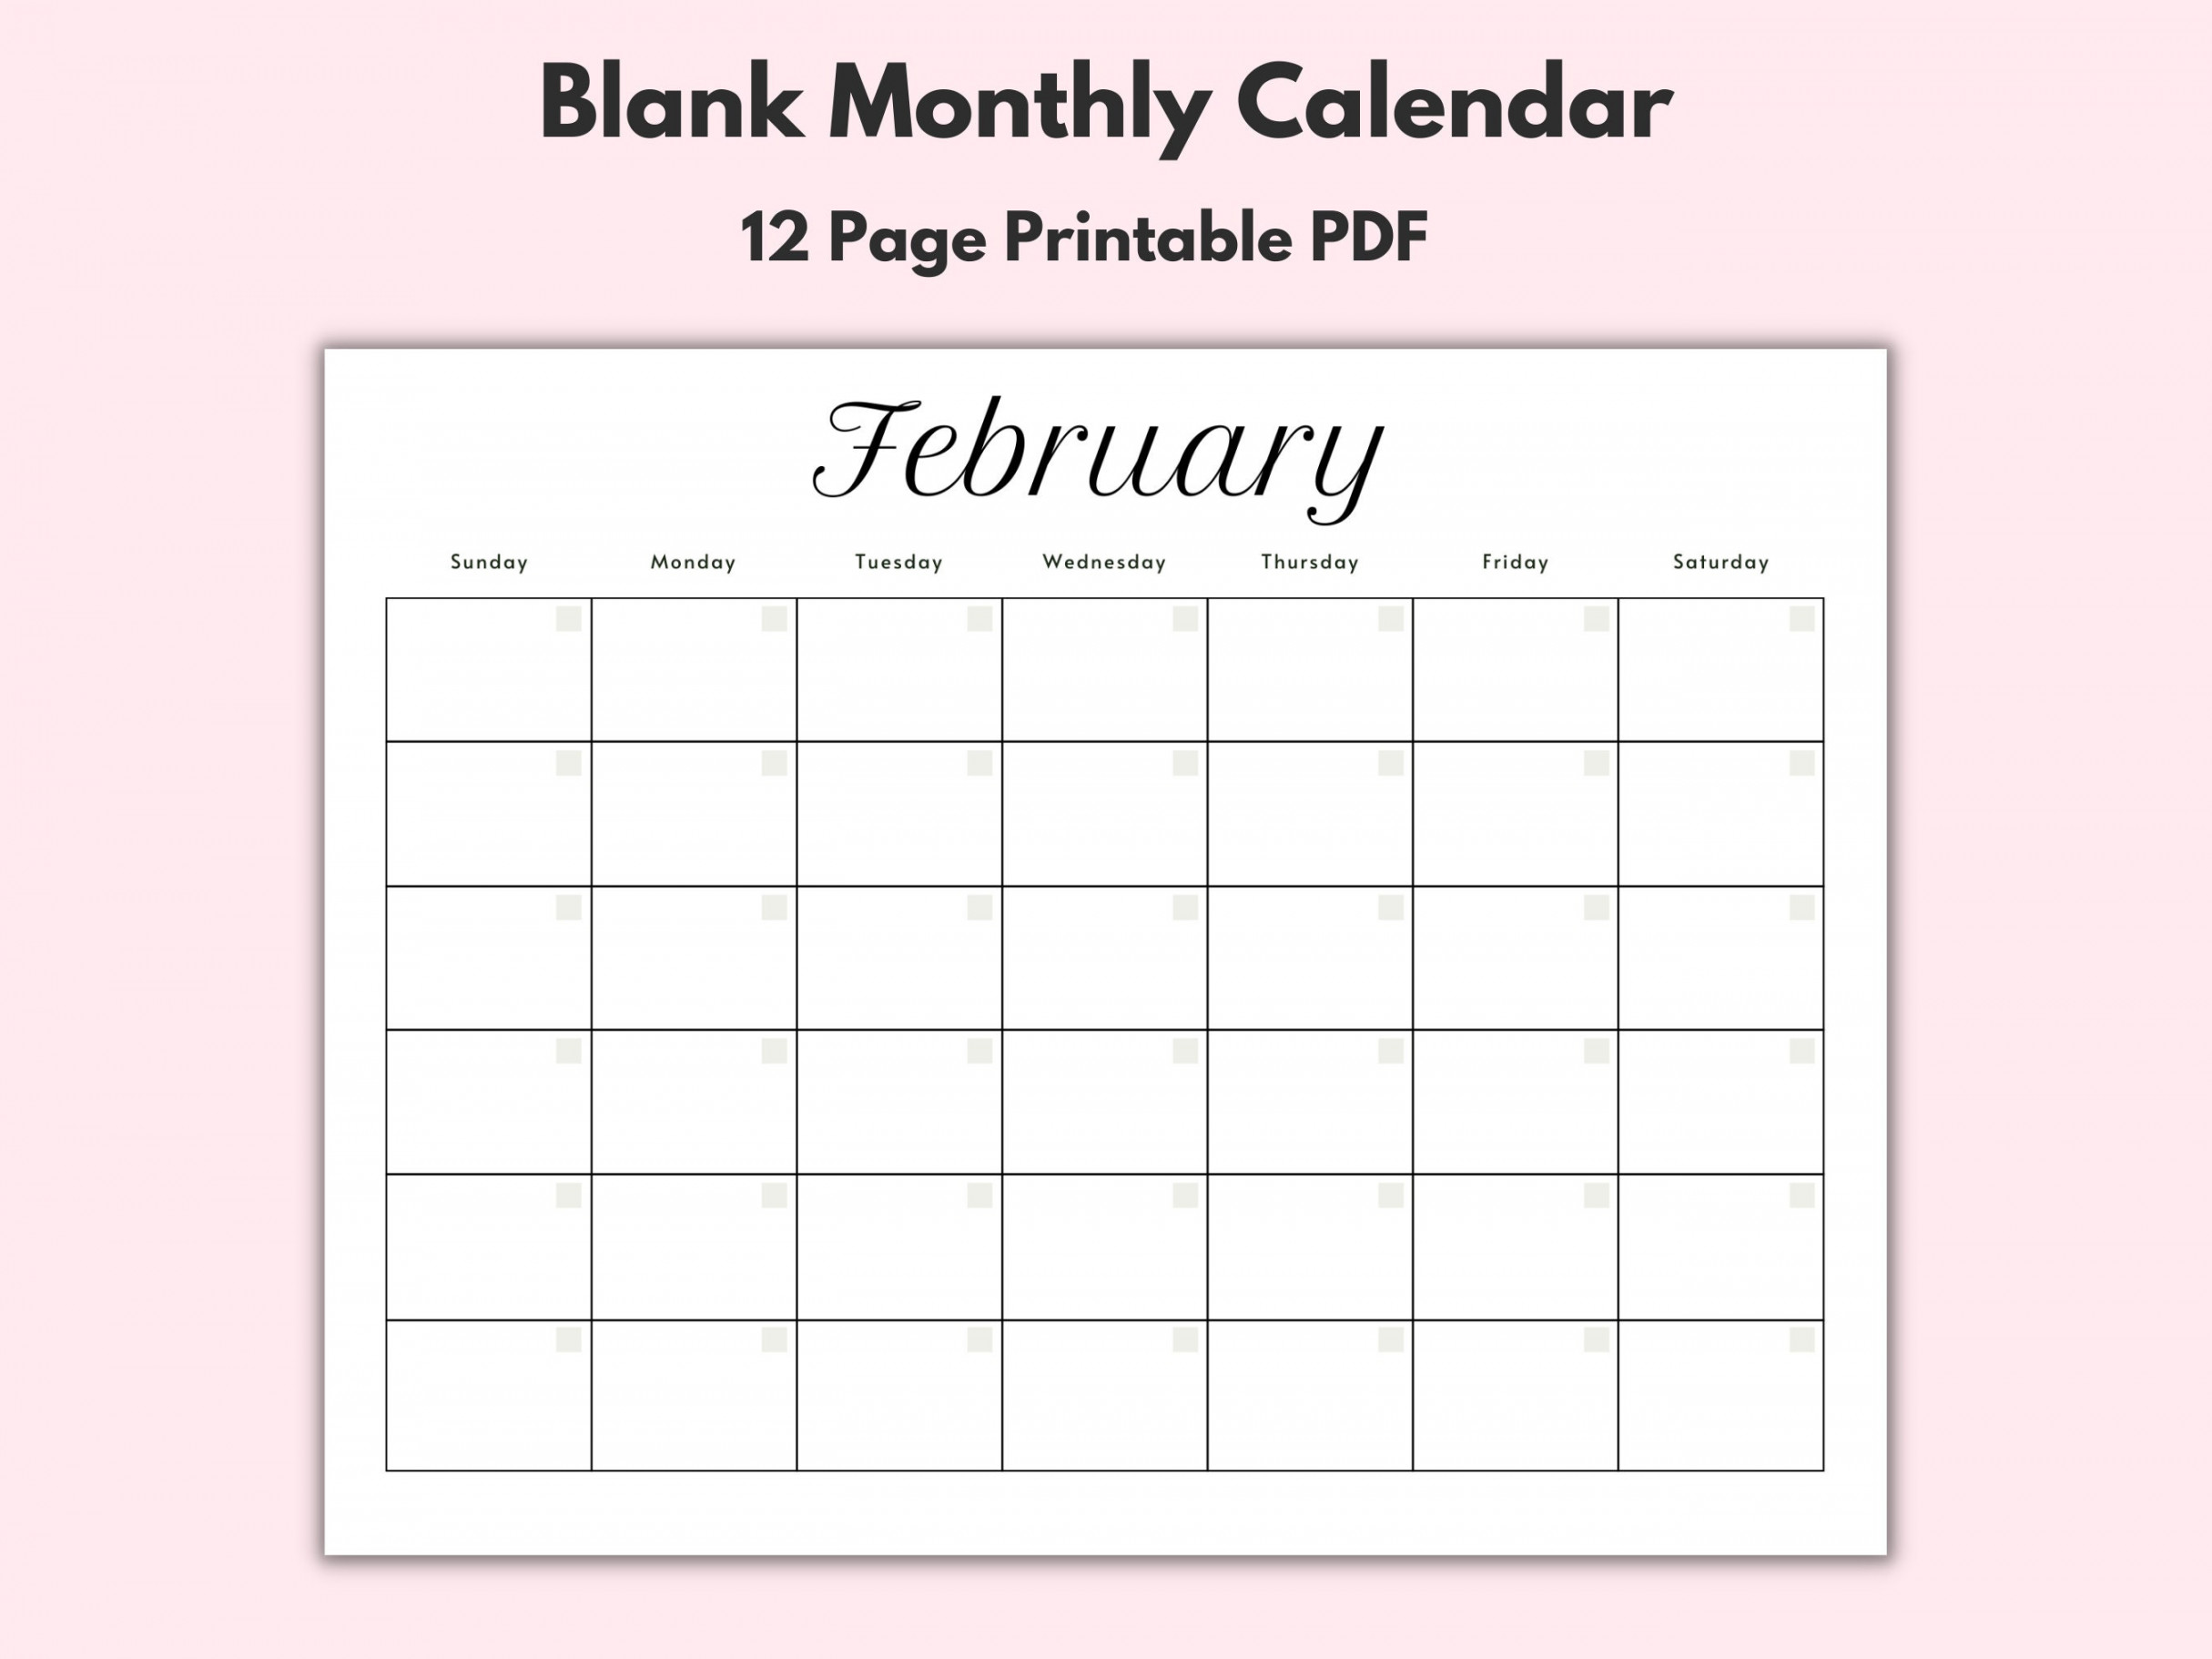 Monthly Blank Calendar Printable Calendar Template Horizontal